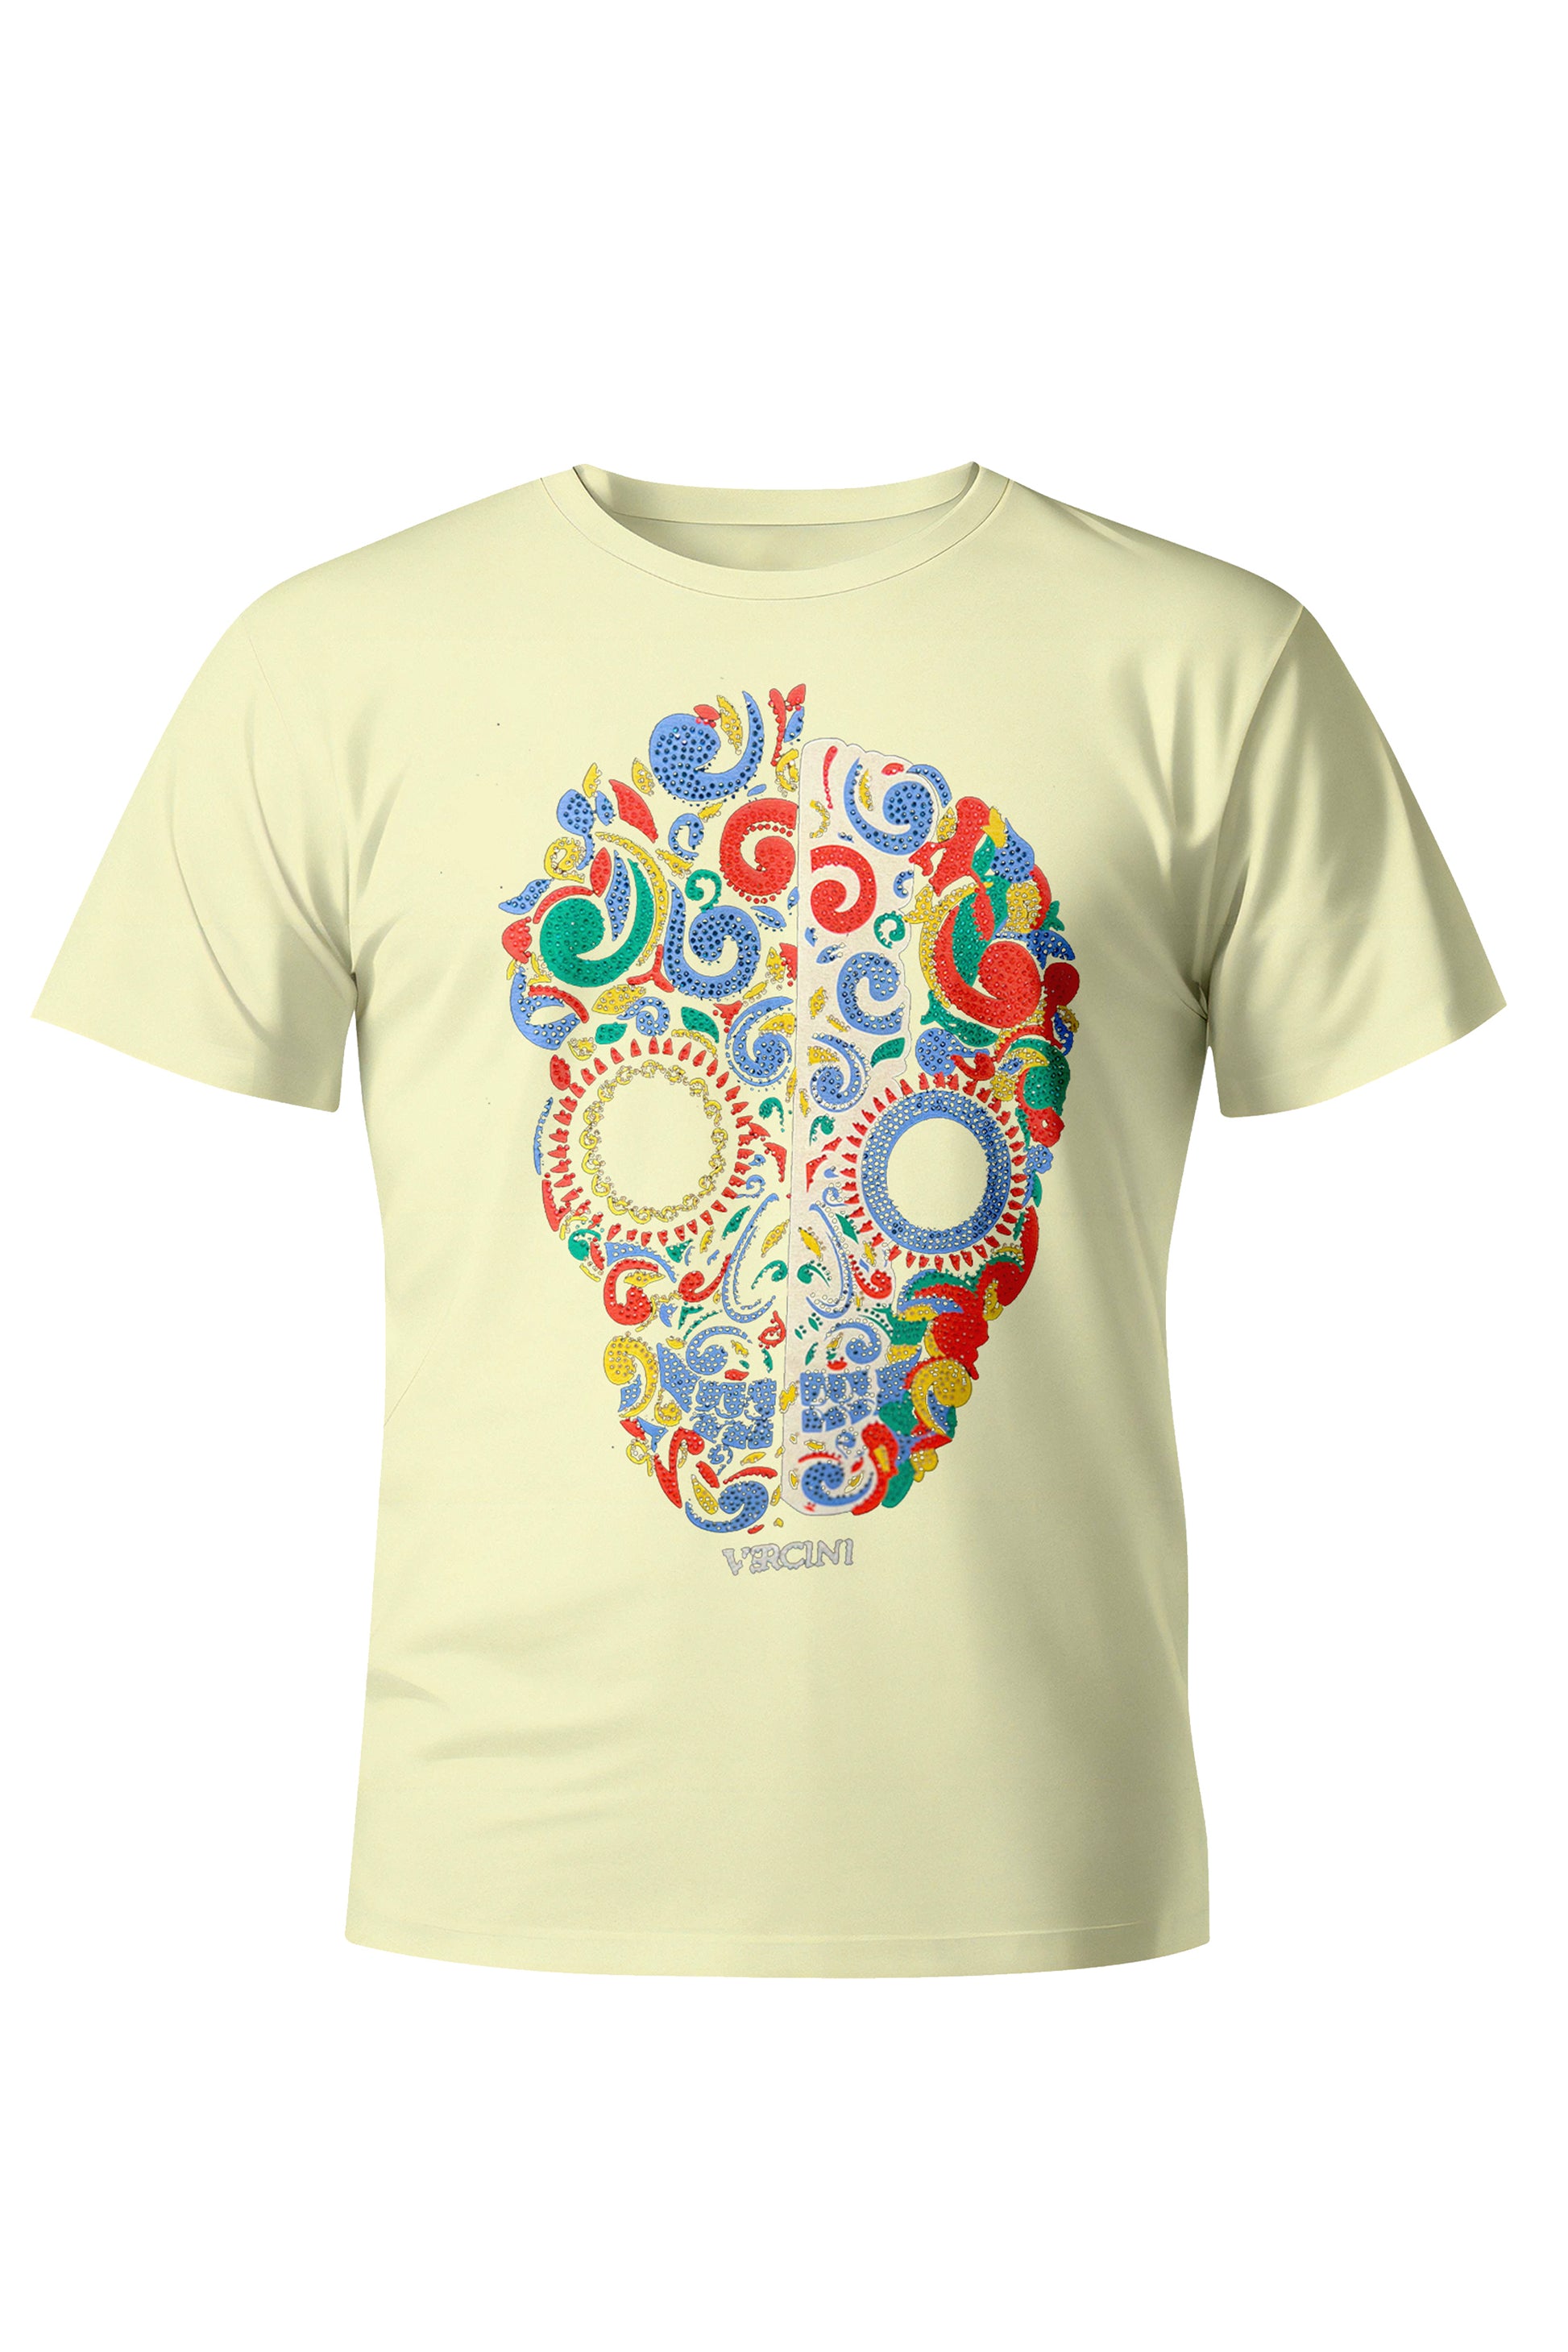 Heartbeat Skull Mosaic T-Shirt VERCINI T-SHIRTS Shirt Collection Vercini